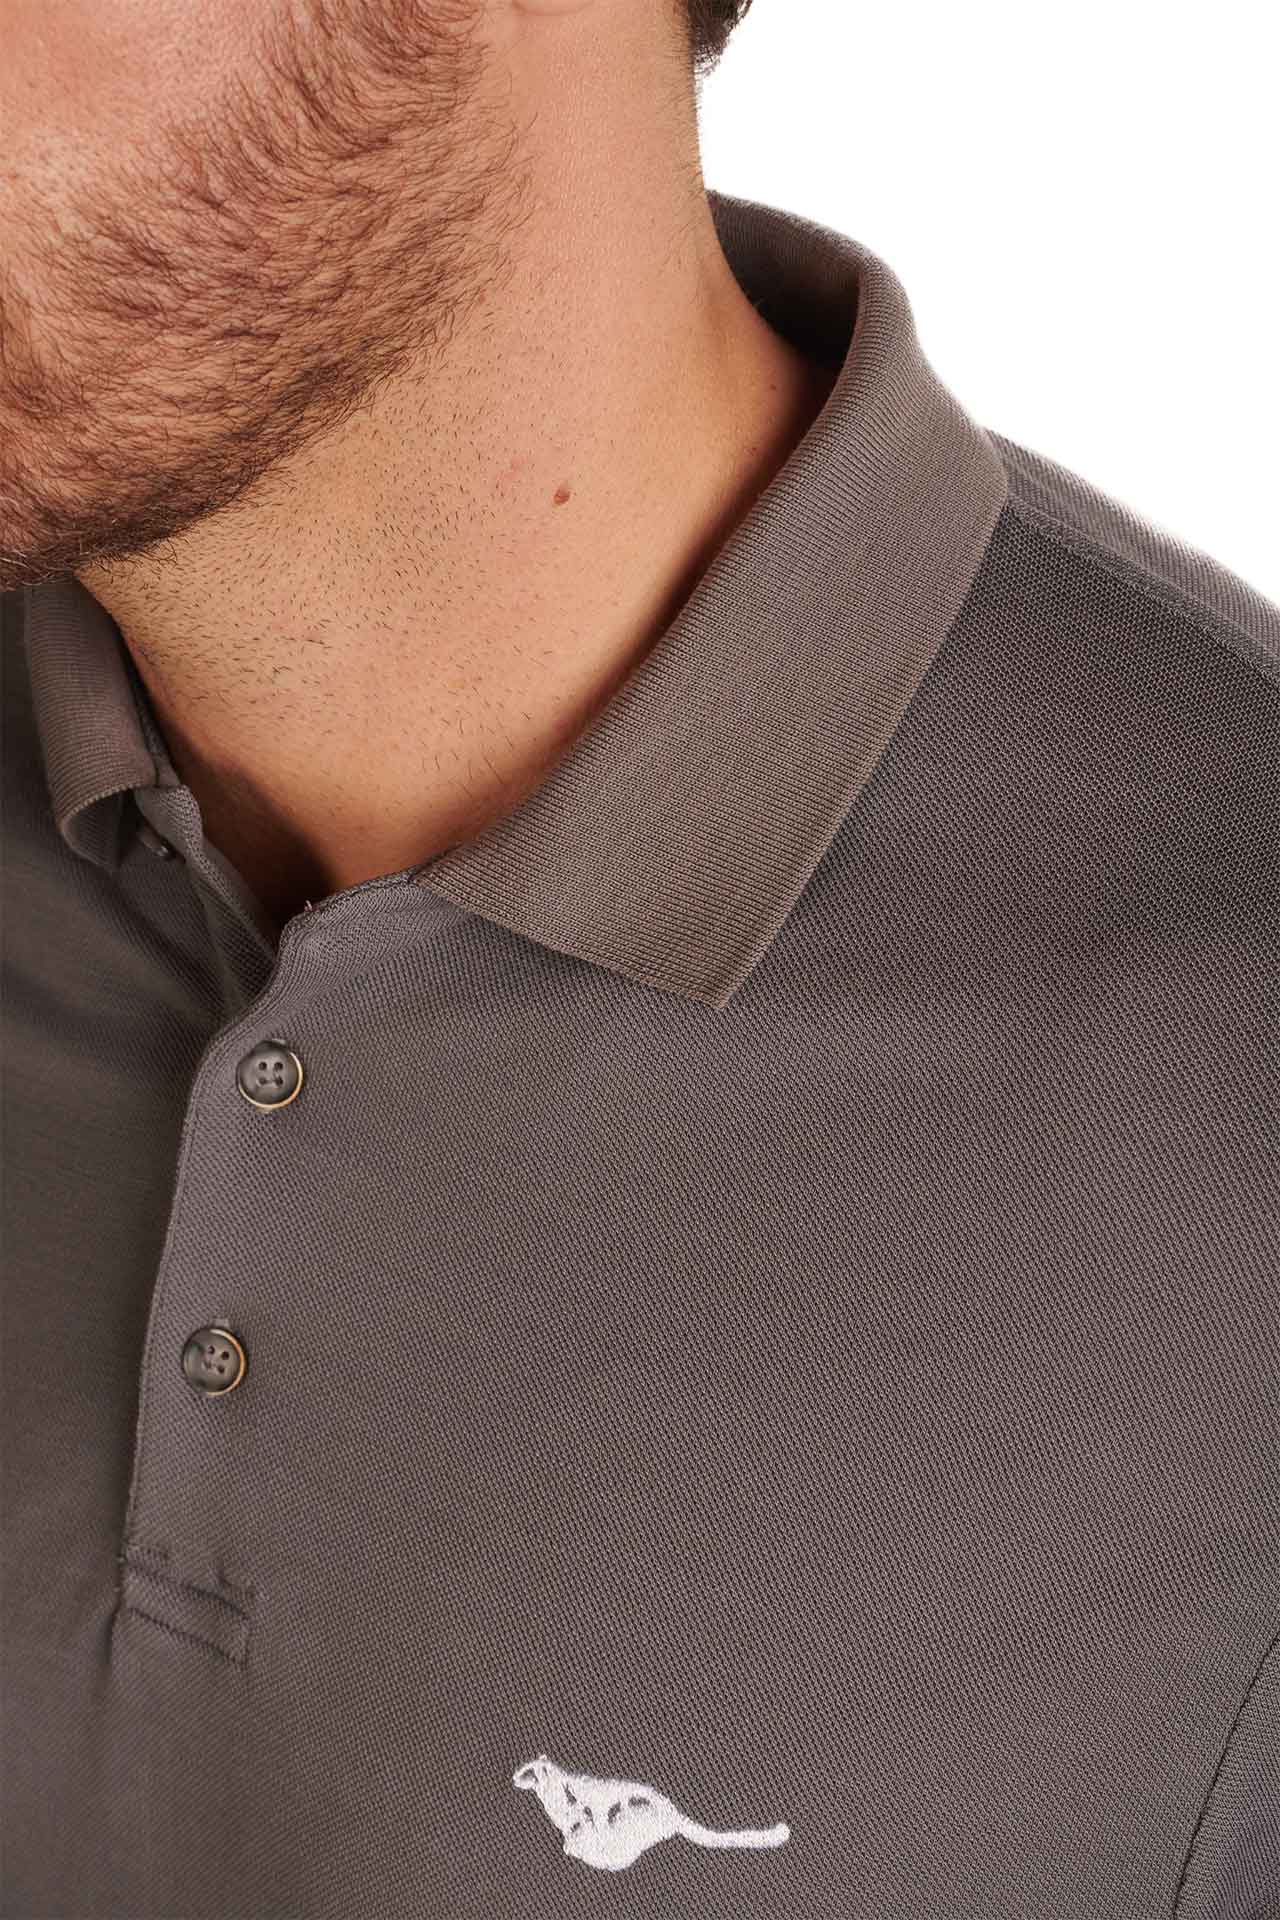 granite-grey-biodegradable-pure-merino-wool-golf-polo-shirt-for men-by-snöleo.-collar-model-closeup-view.